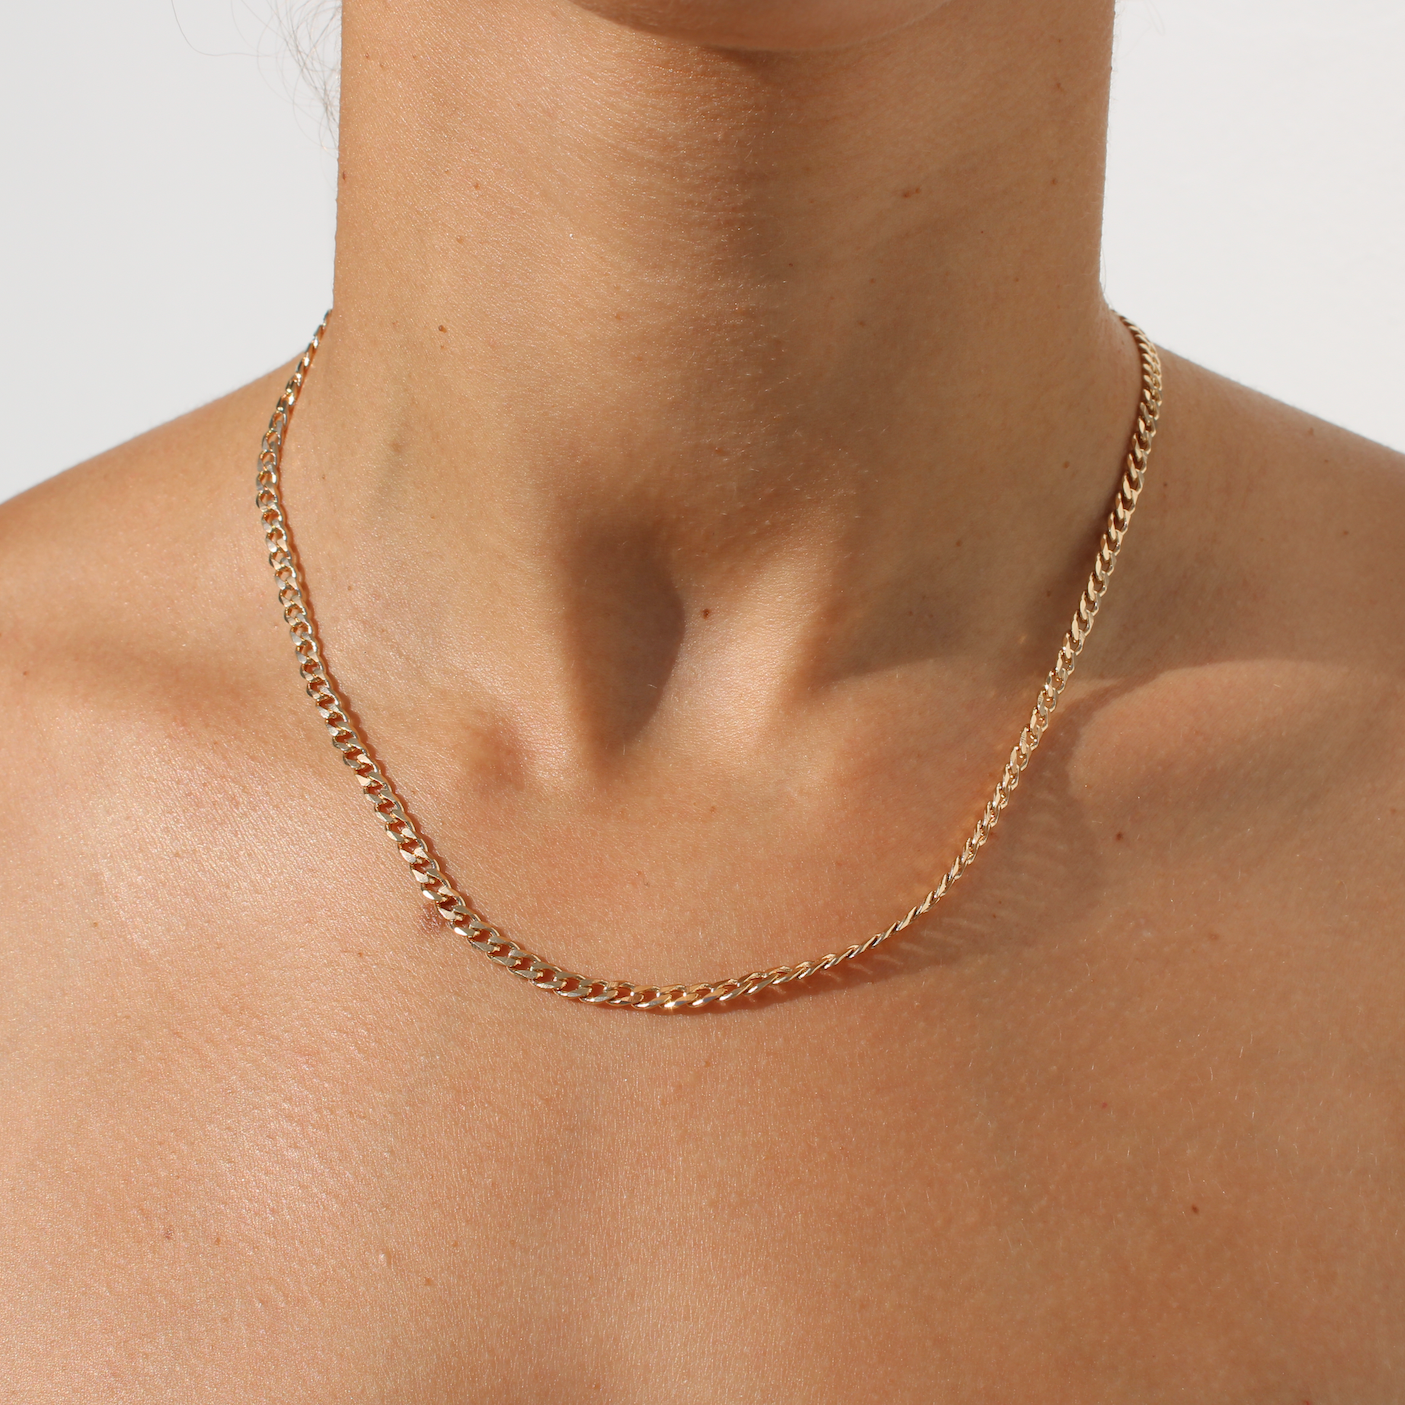 Beaded Satellite Chain Necklace in 18k Gold Vermeil | Kendra Scott